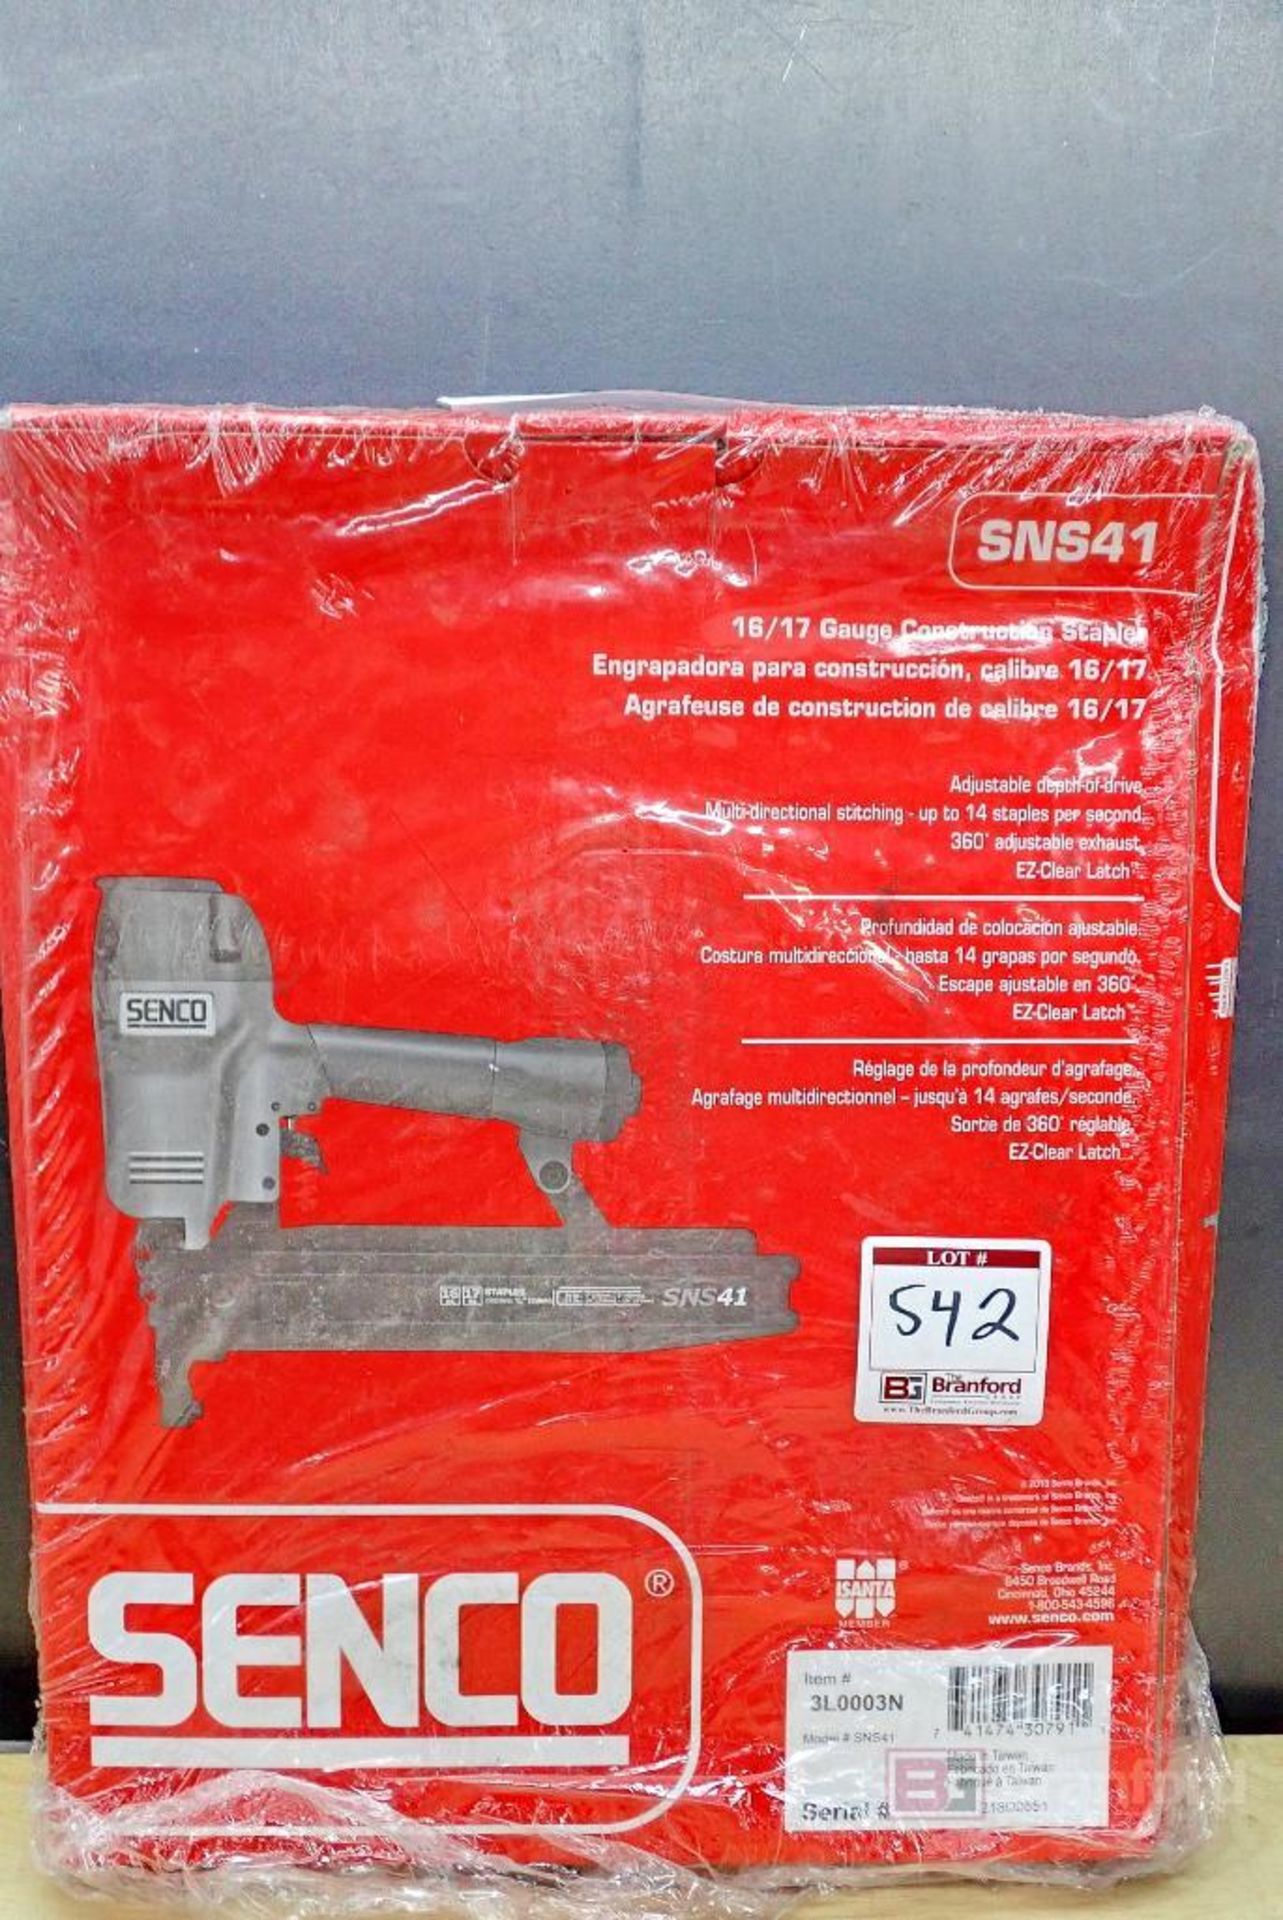 Senco SNS41 16/17 Gauge Construction Stapler - Image 2 of 4